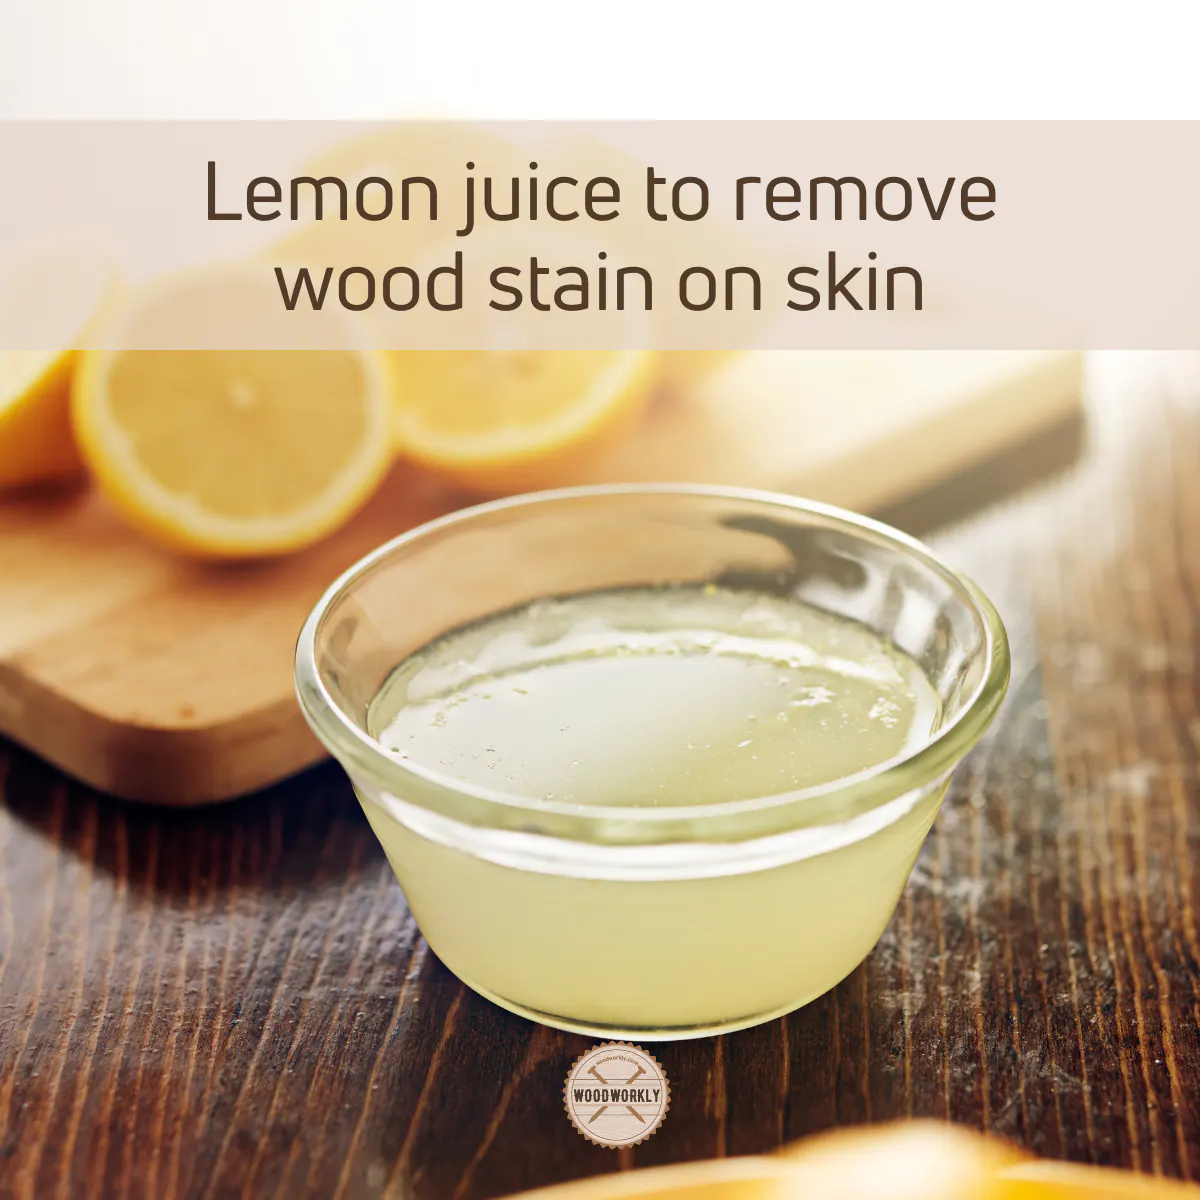 Lemon juice to remove wood stain on skin